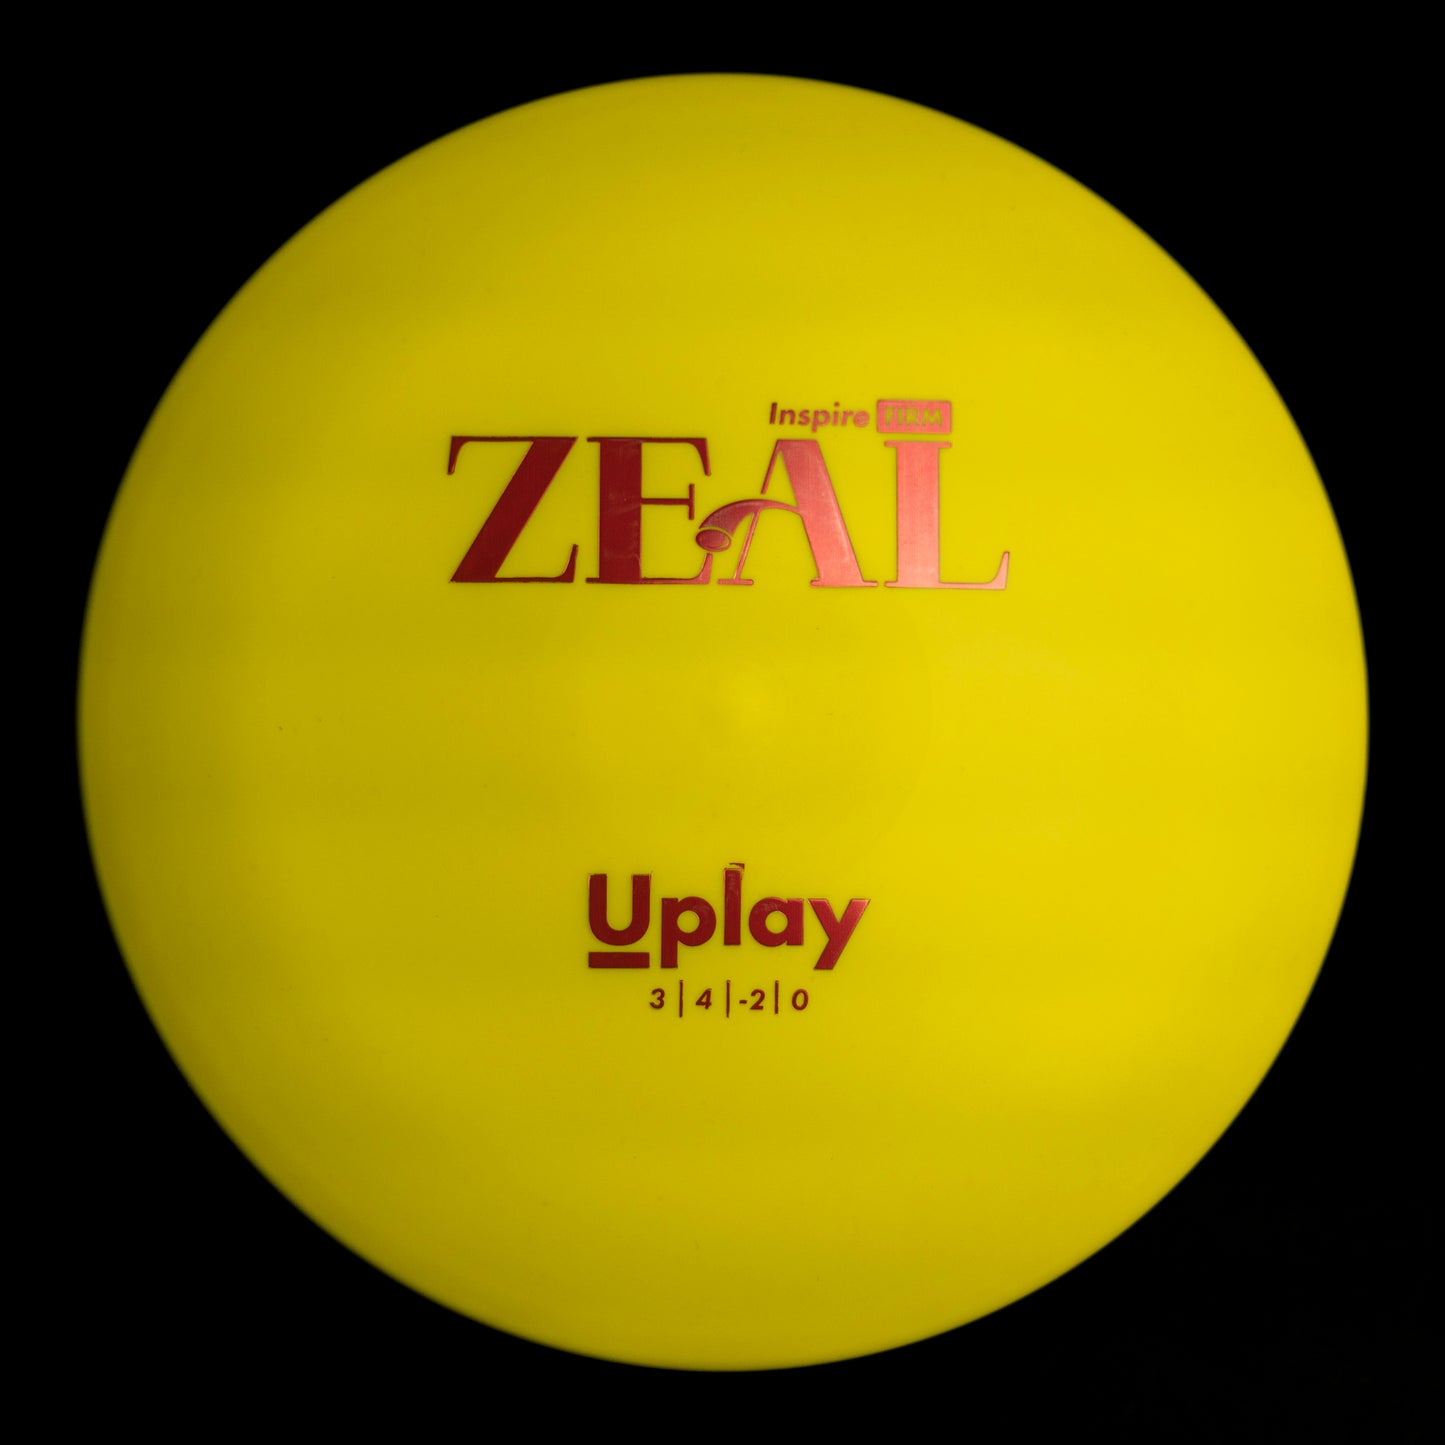 Uplay Zeal - Inspire FIRM